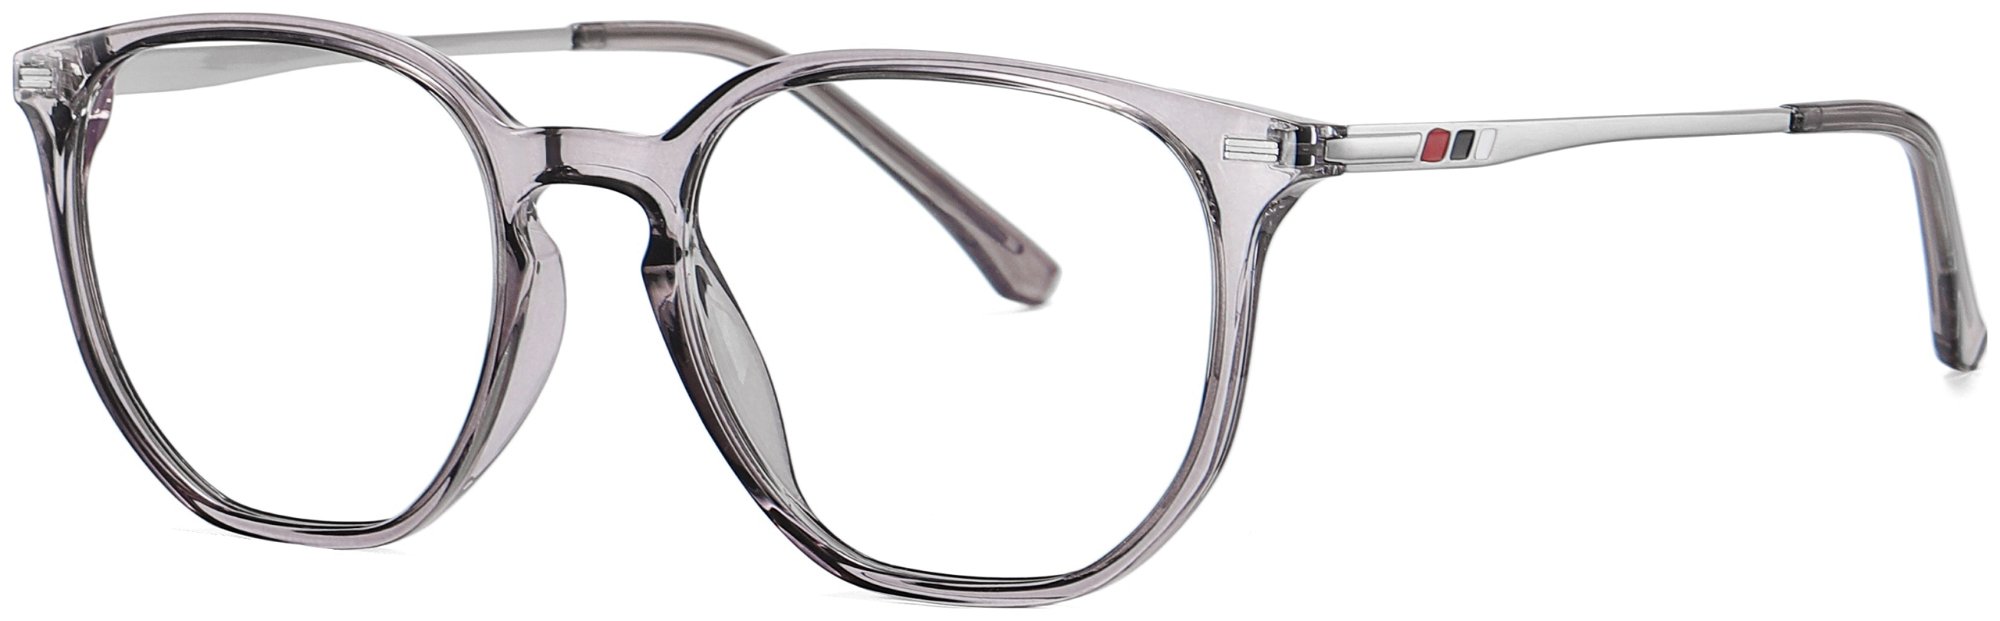 Regulær bluelight briller, Intro by Kaleu (H: 5,4 cm. x B: 2 cm. x L: 14,5 cm., Grå)